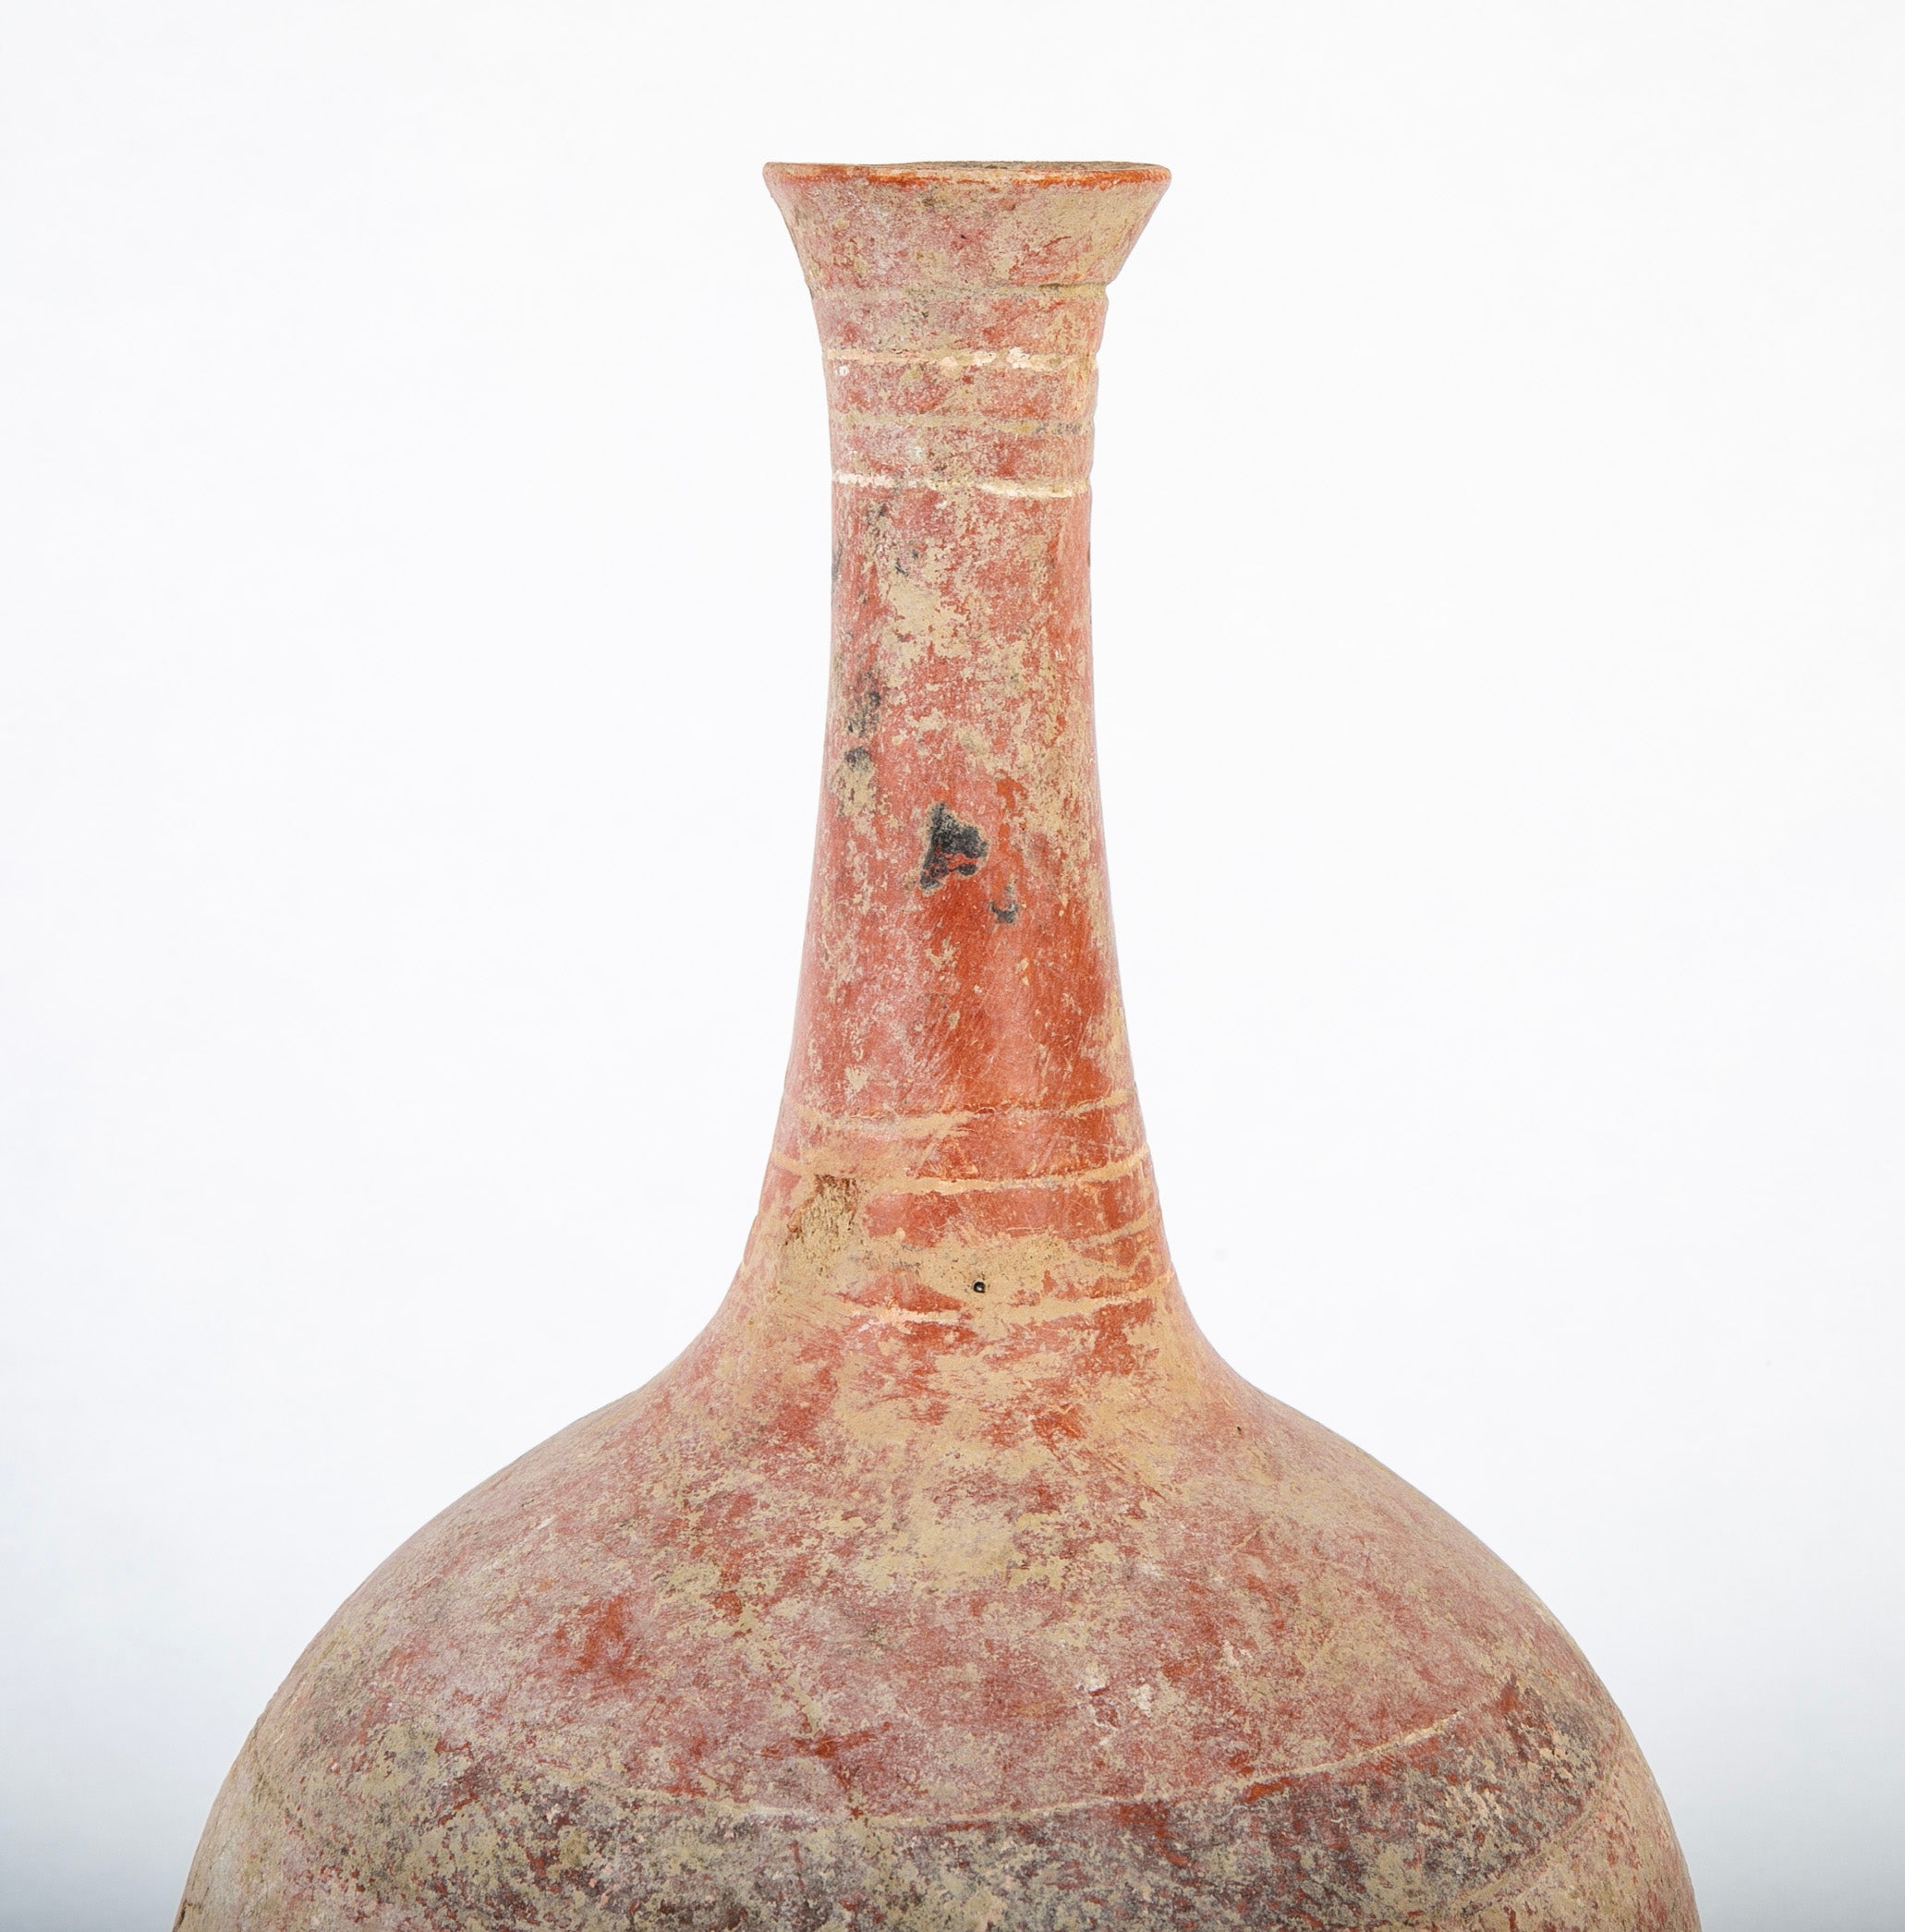 Dejenne, Mali Orle Form Terracotta Vessel with Elongated Neck